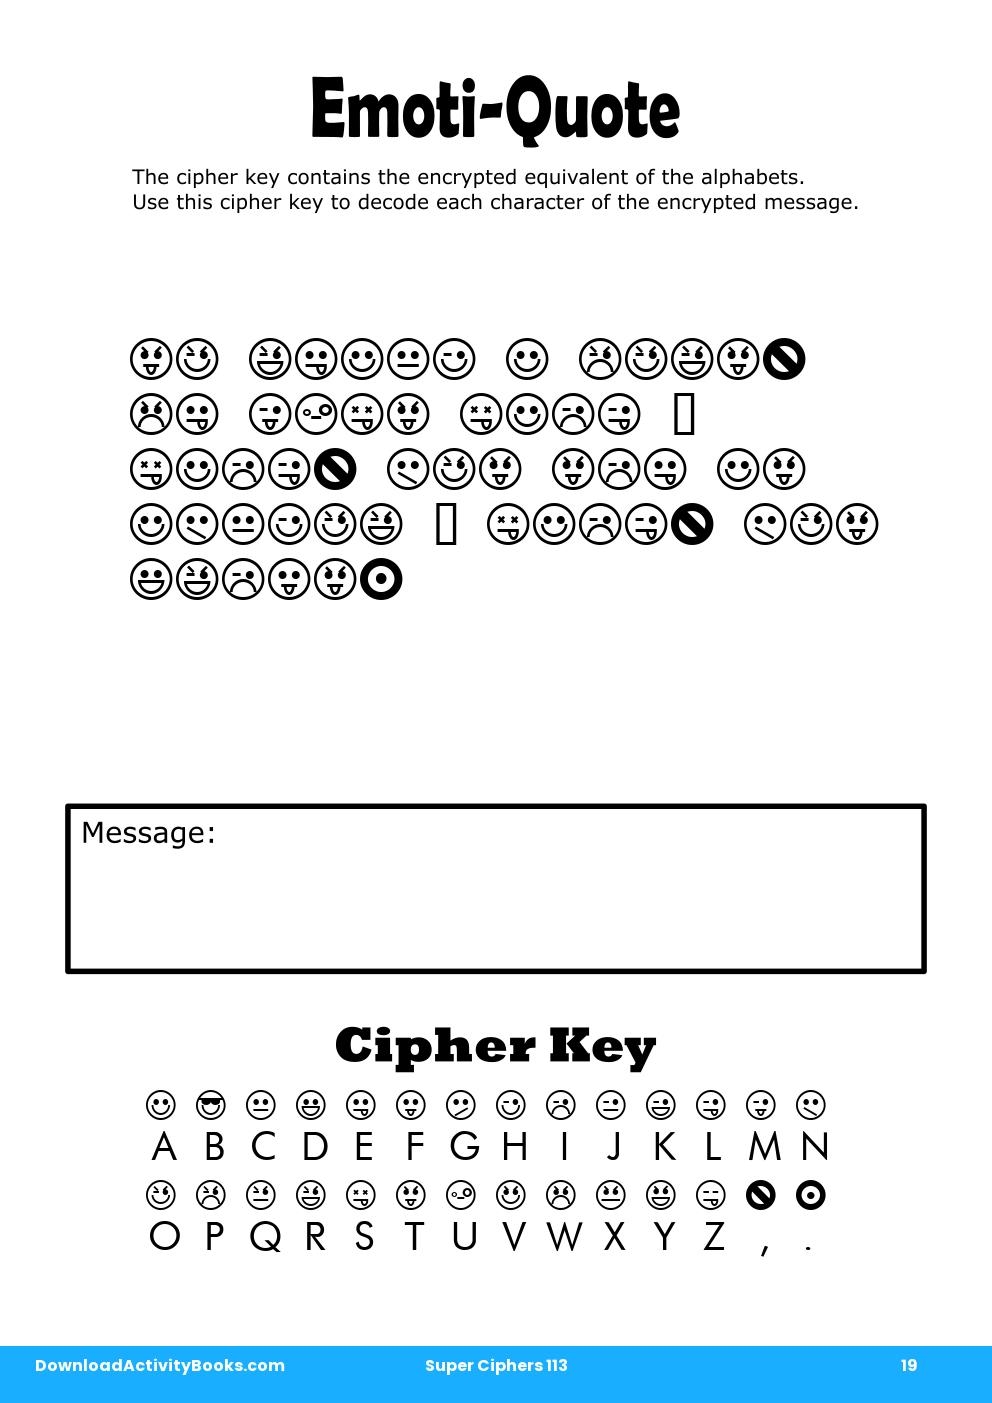 Emoti-Quote in Super Ciphers 113